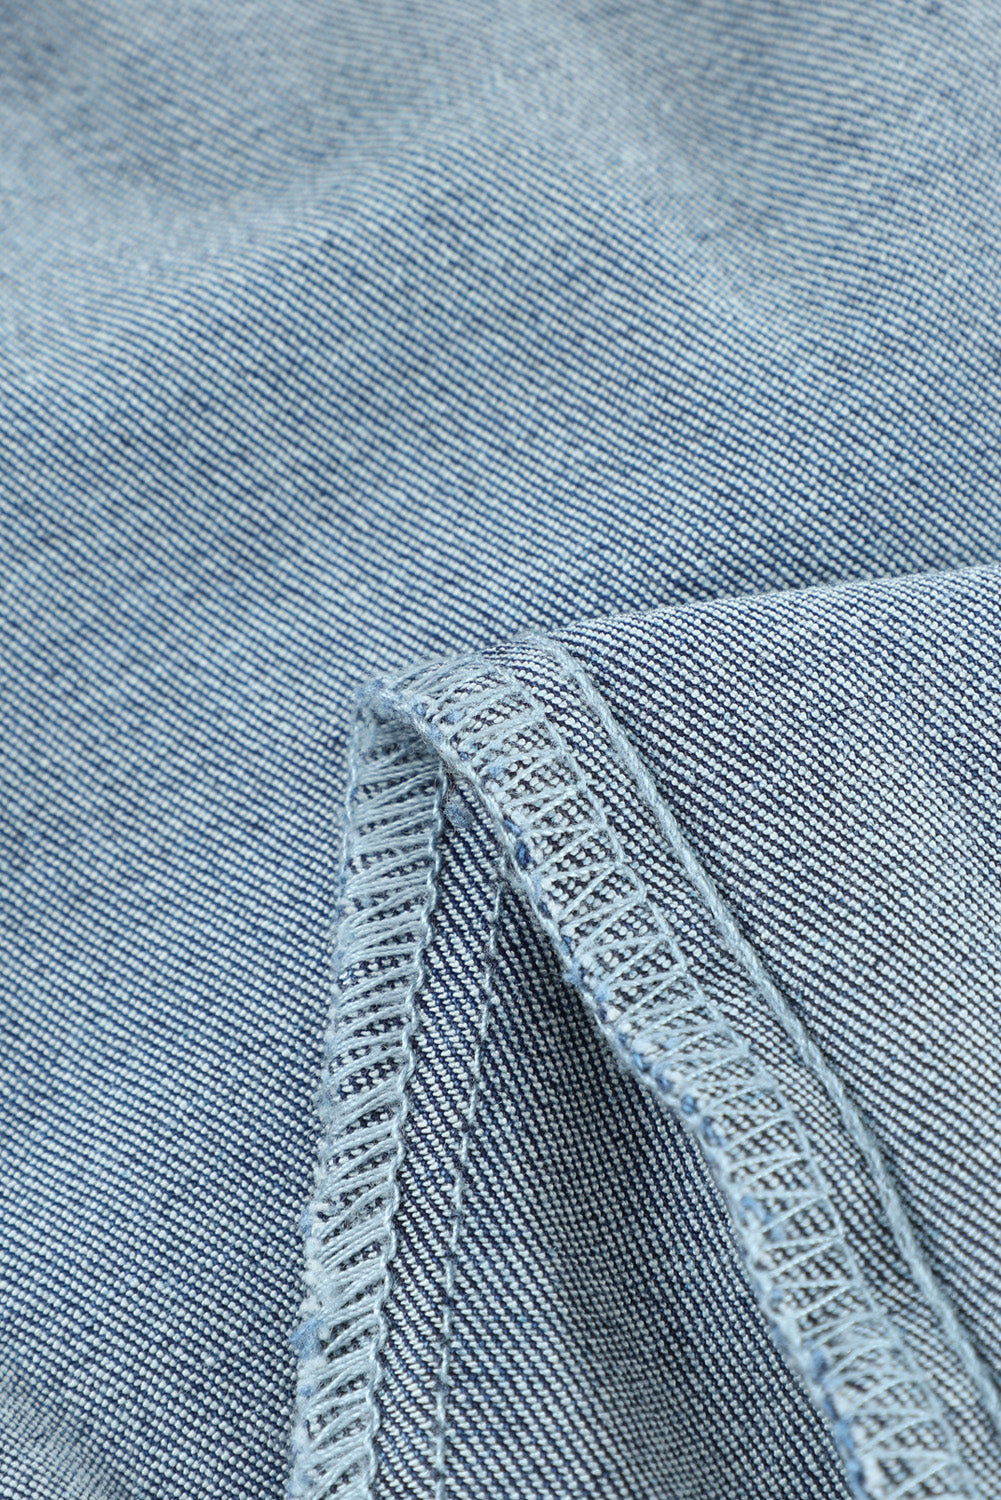 Blue Distressed Raw Hem Button Mid Waist Jeans Jeans JT's Designer Fashion